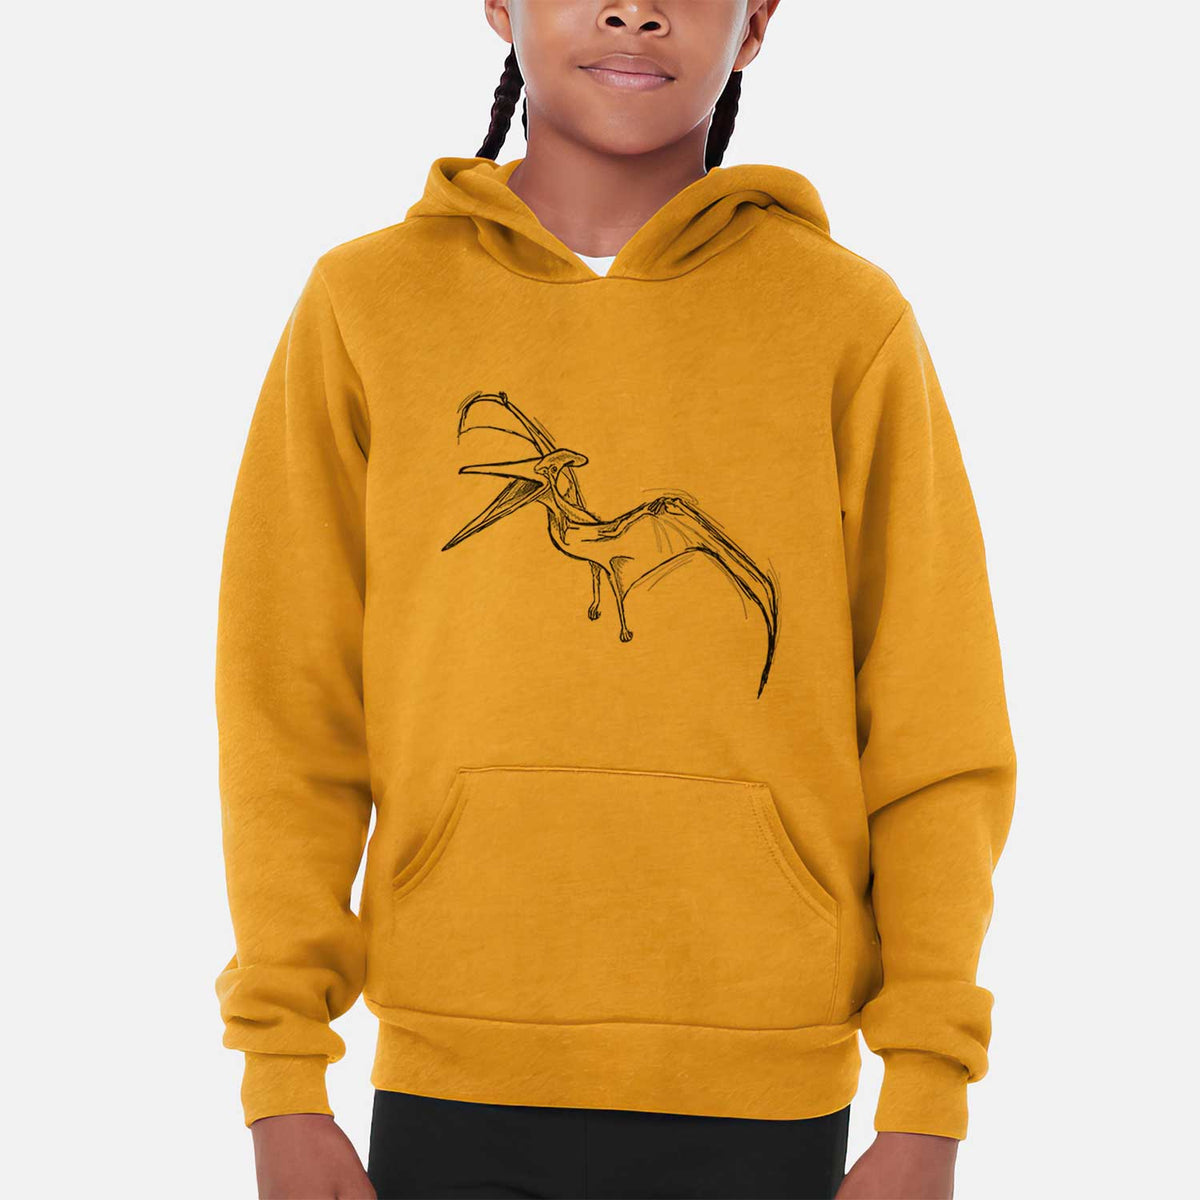 Pteranodon Longiceps - Youth Hoodie Sweatshirt